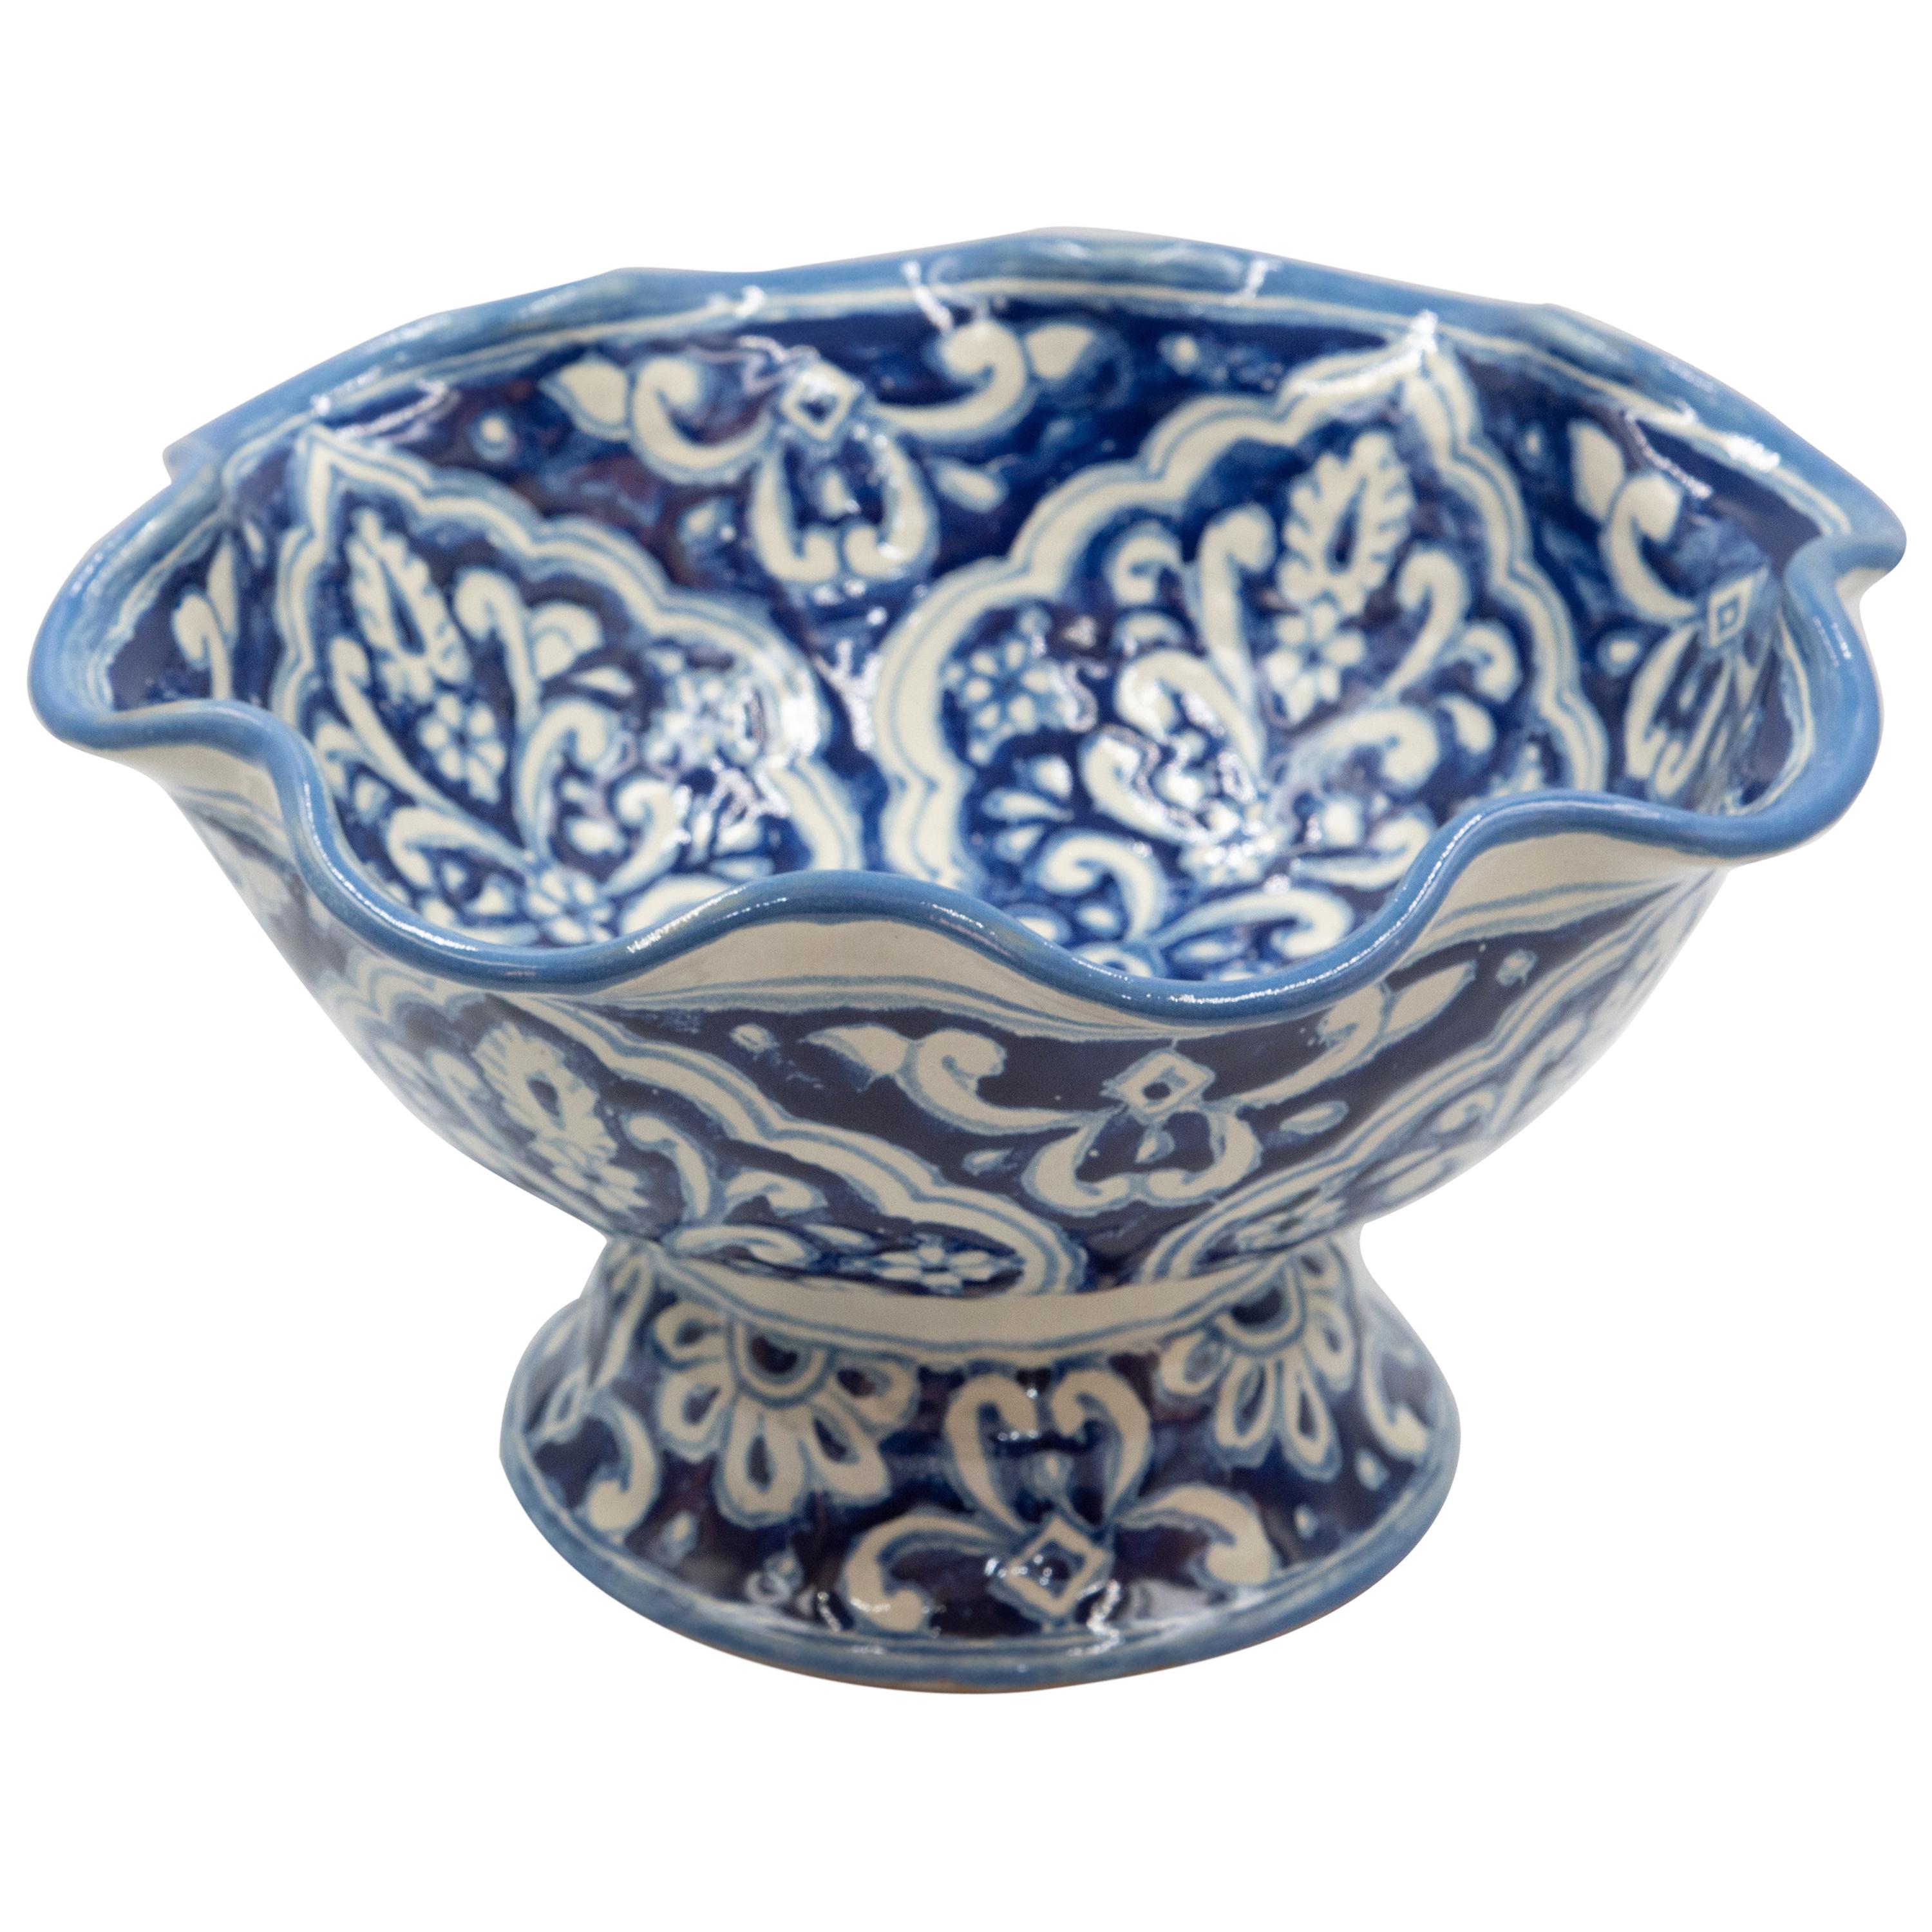 Authentic Talavera Decorative Fruit Bowl Folk Art Mexican Ceramic Blue White